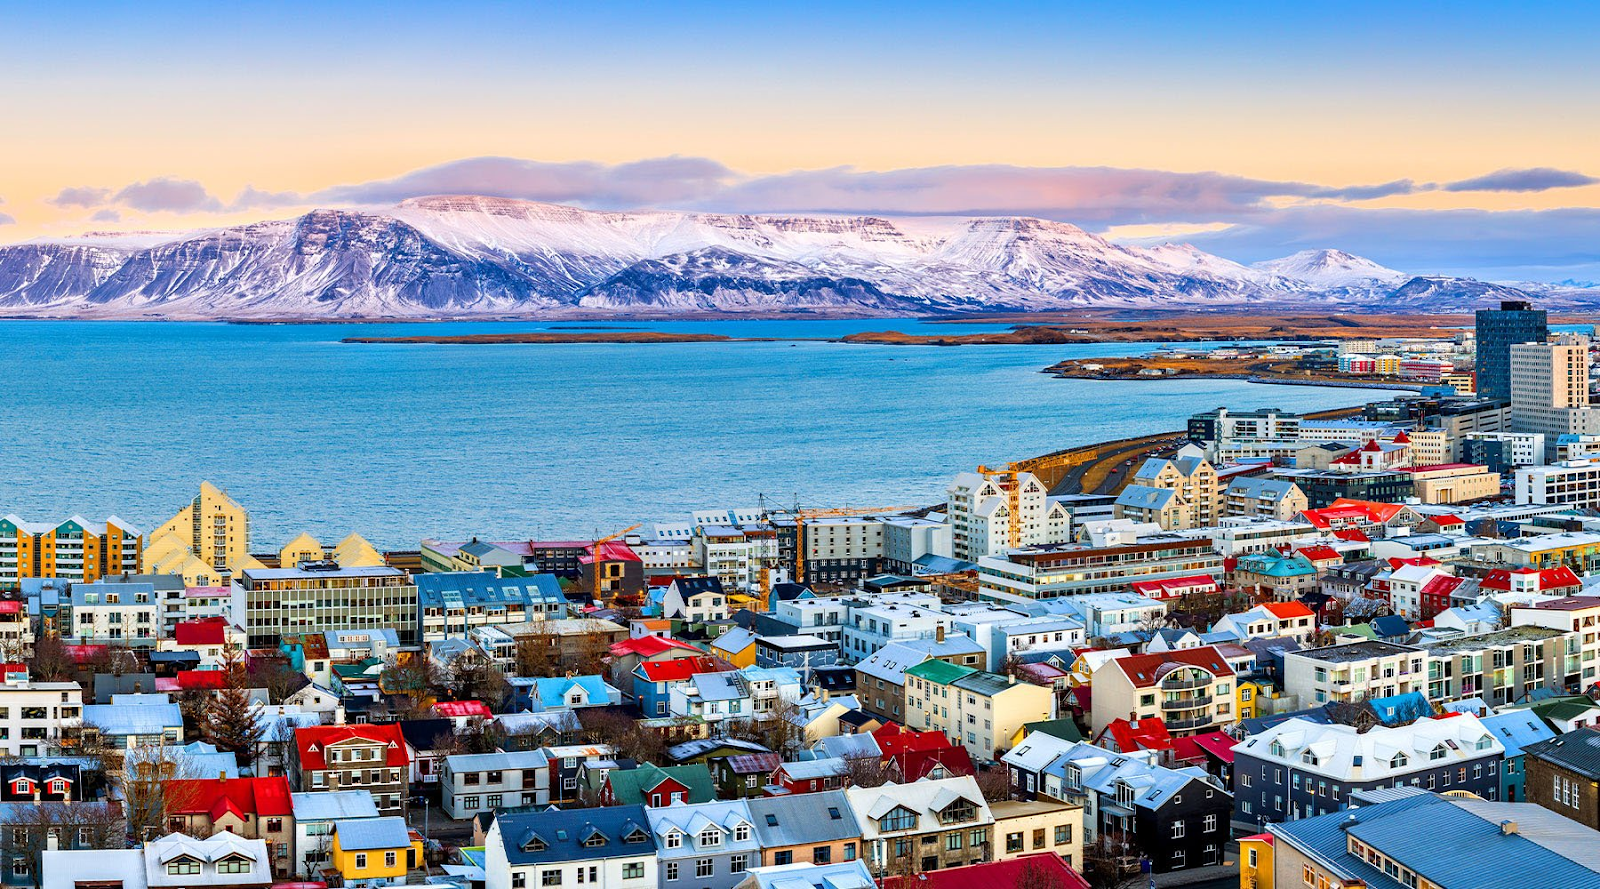 Tour du lịch Bắc Âu - Reykjavik, Iceland 